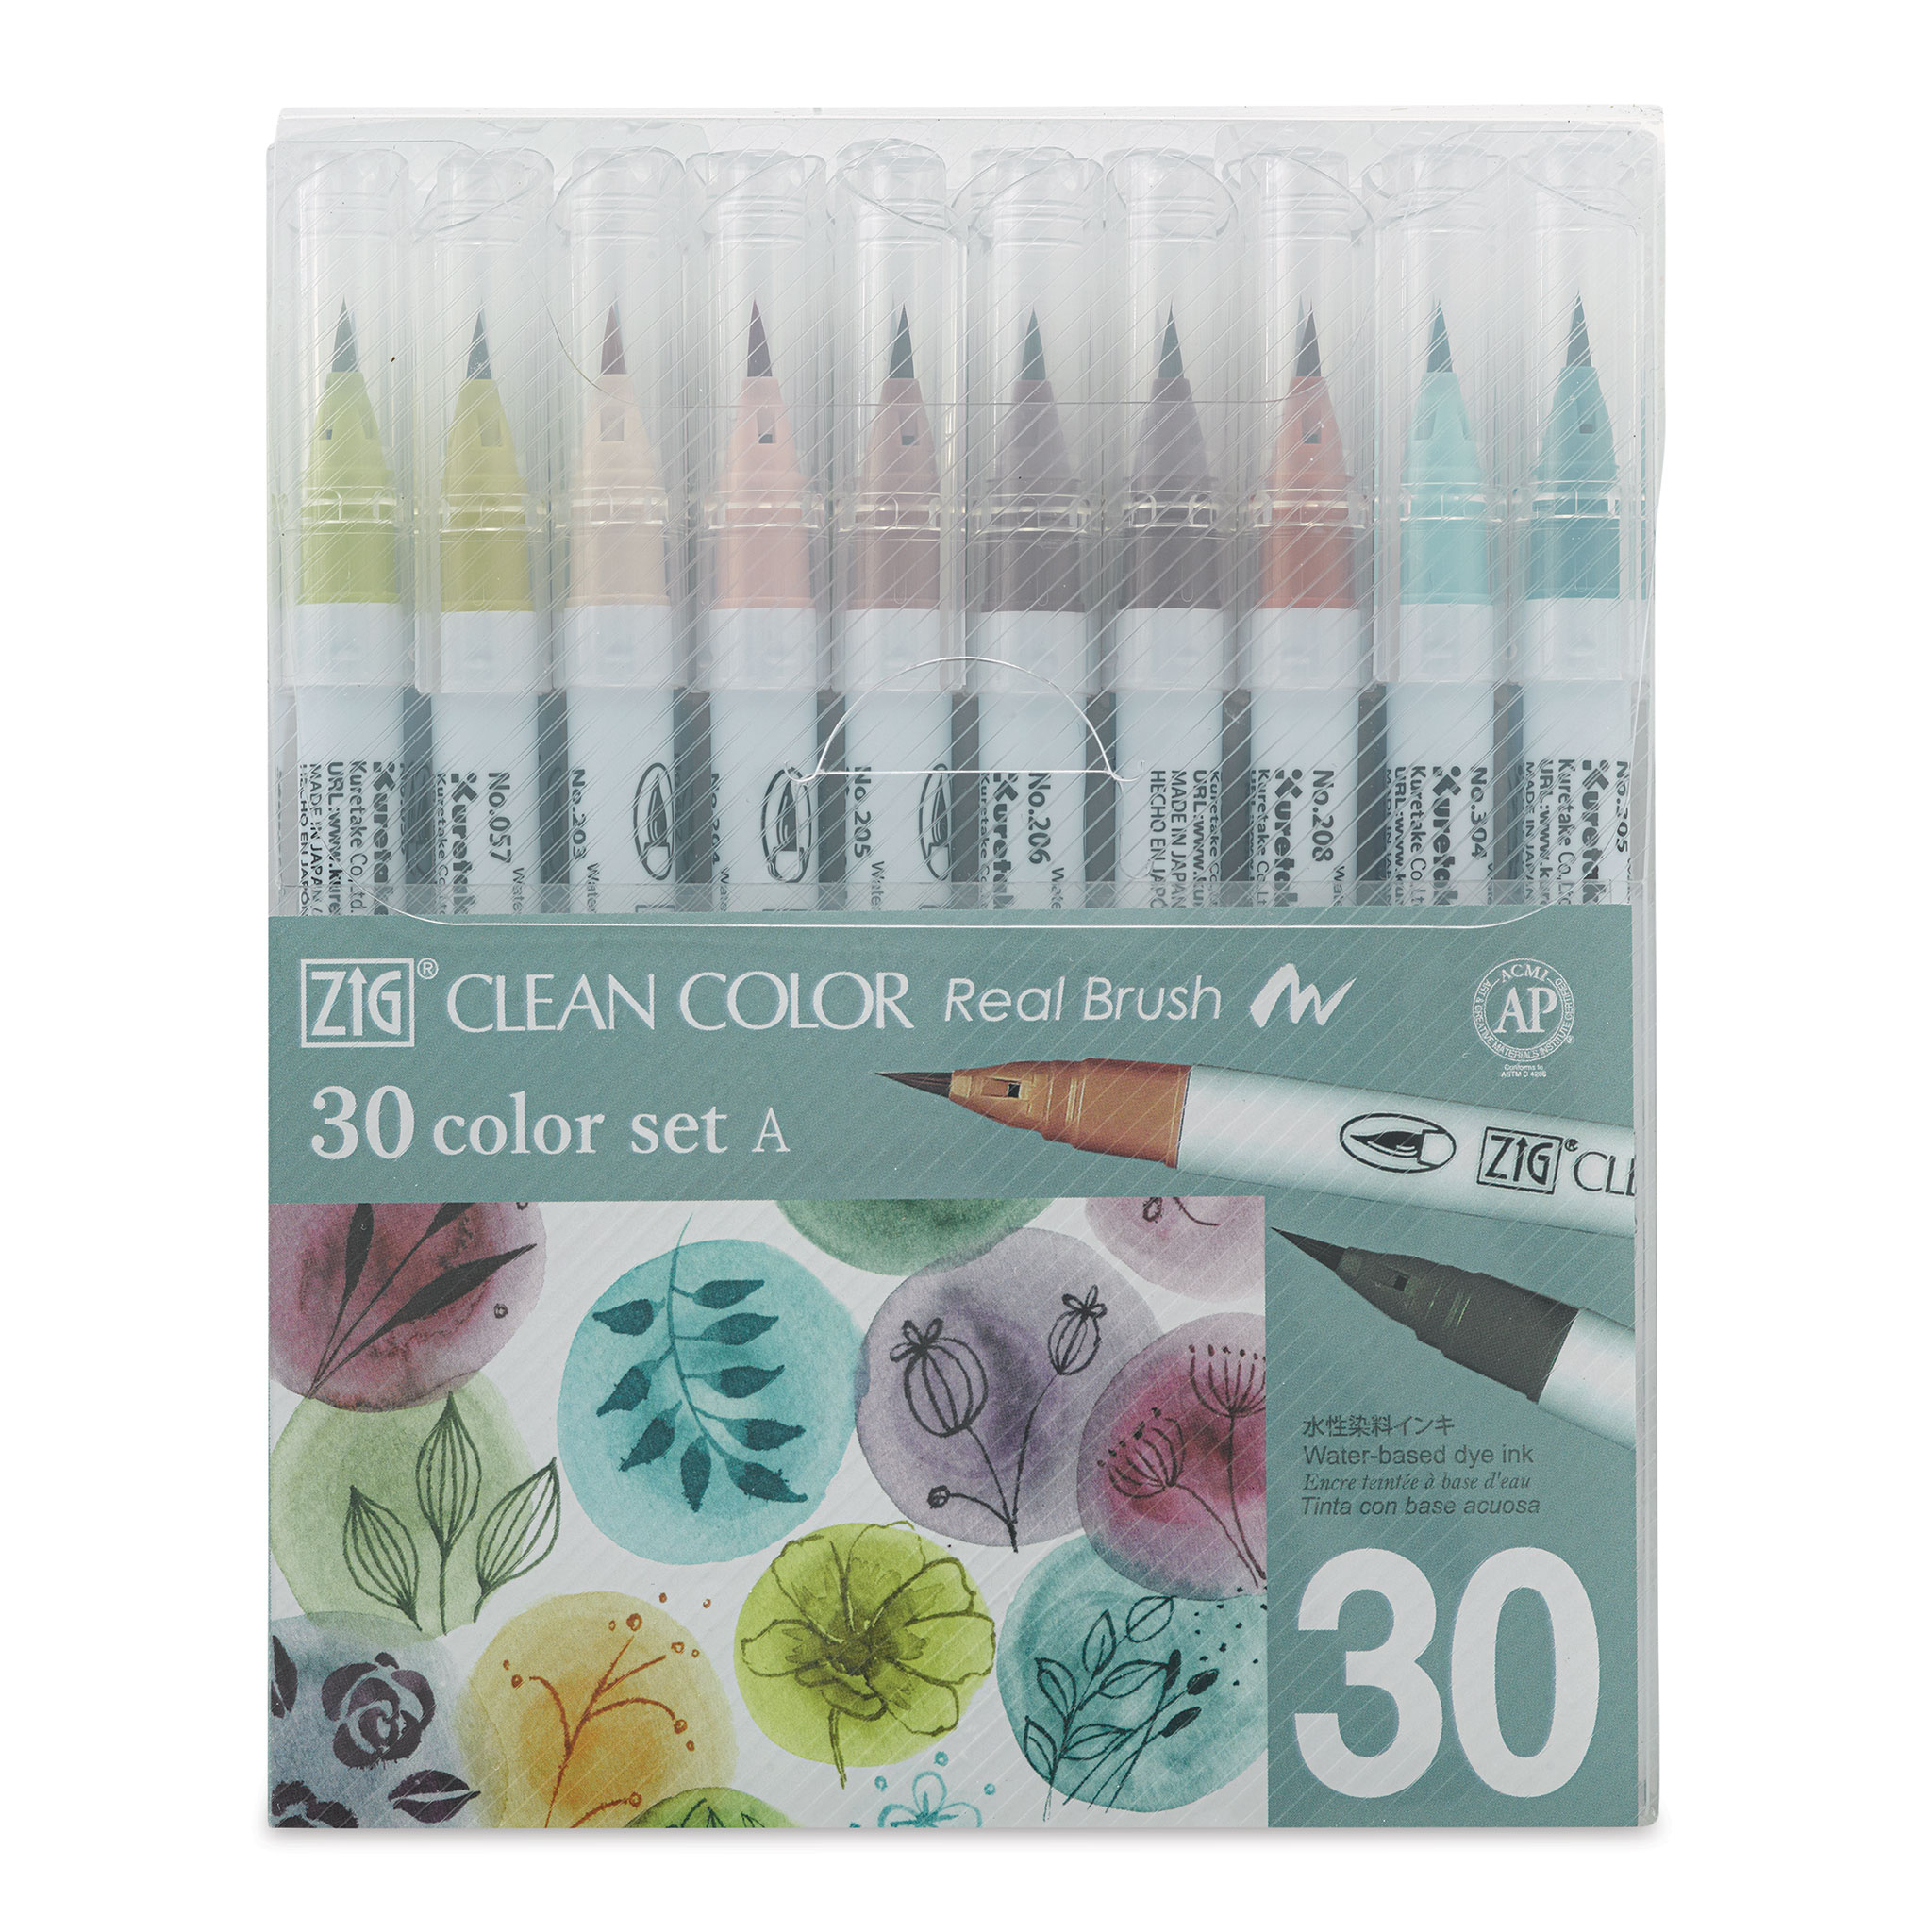 NEW Kuretake ZIG Clean Color Real Brush Pen Set Free Shipping Japan fude F/S 